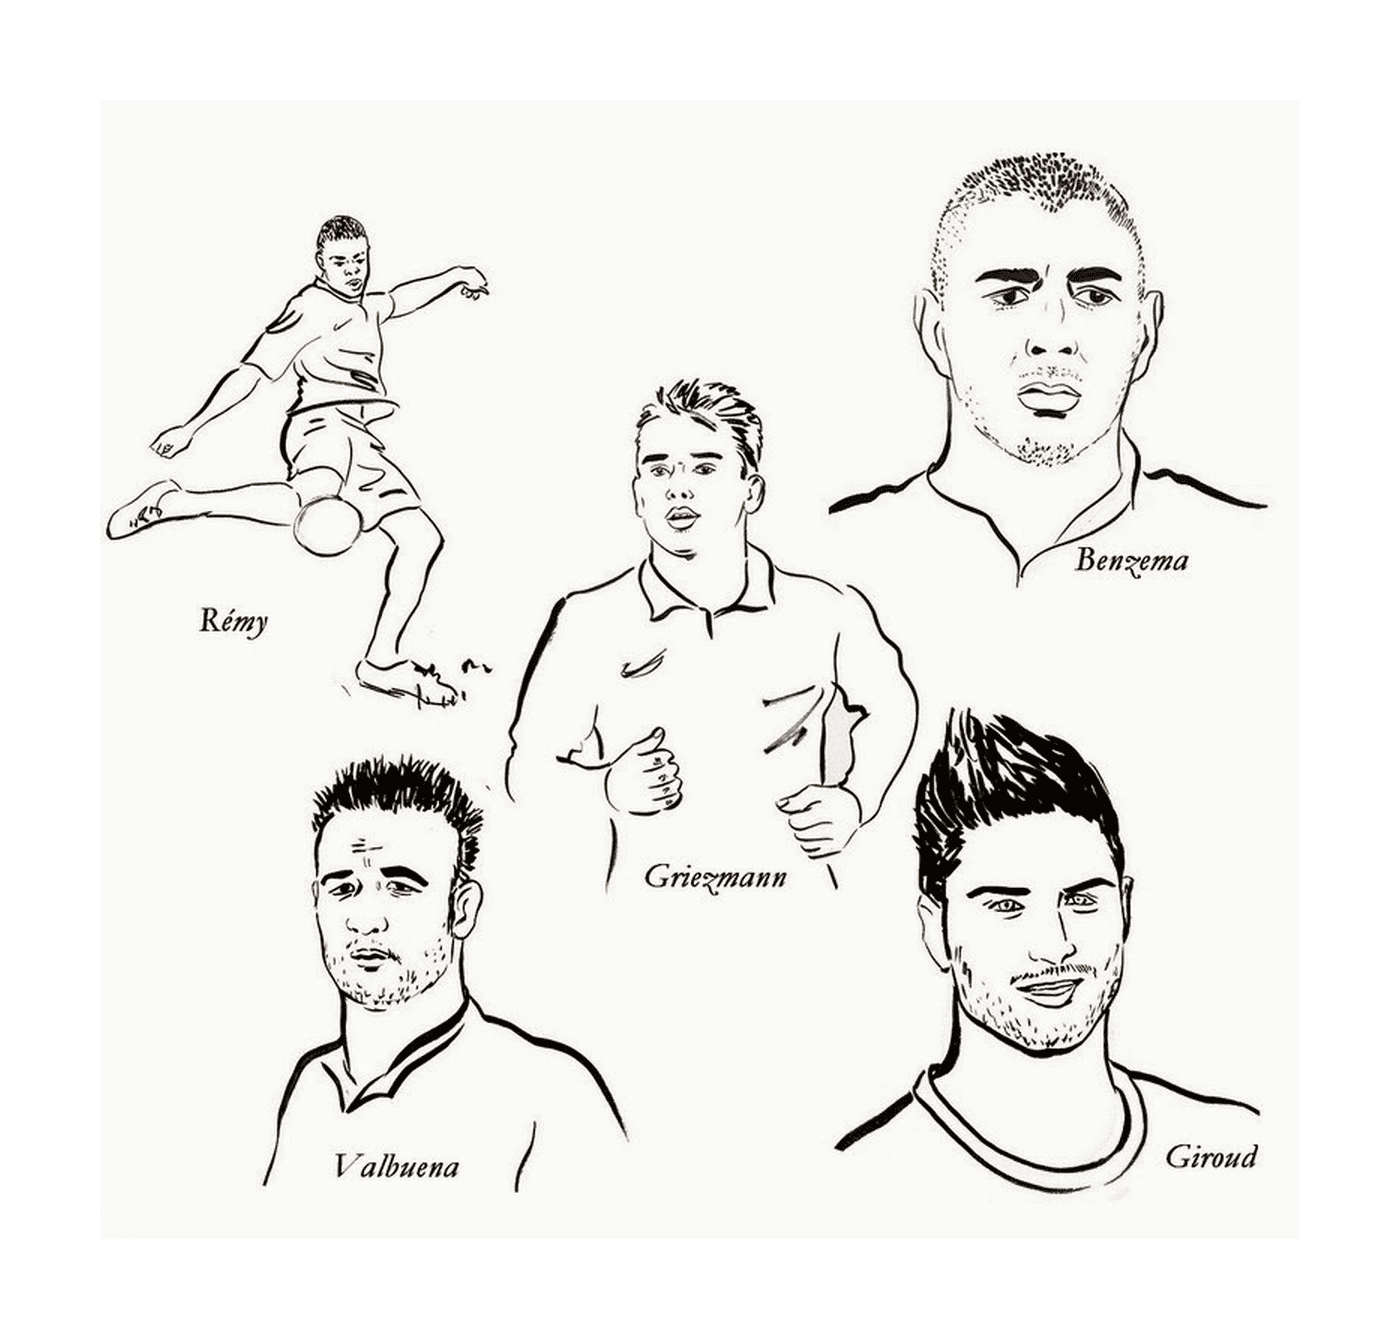  Karim Benzema, Griezmann and other football players 